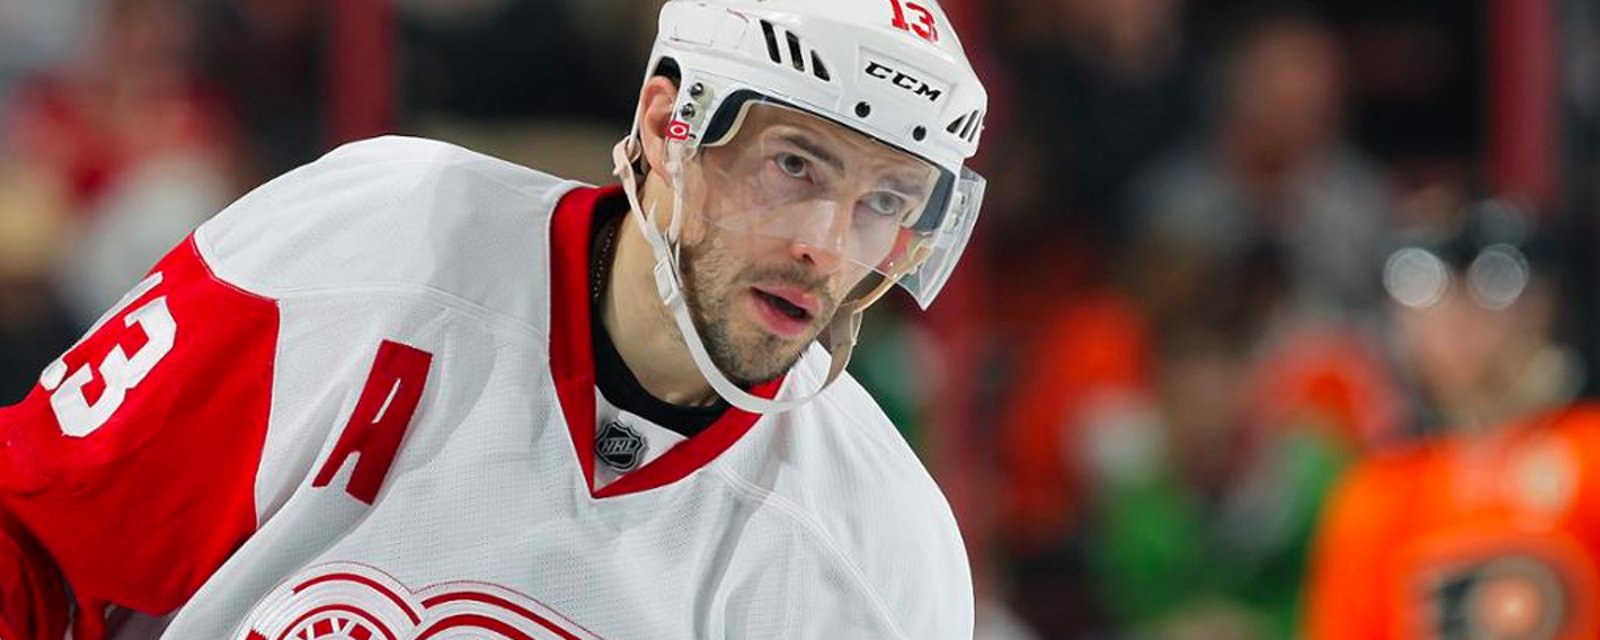 Rumor: Datysyuk linked to… the Leafs?